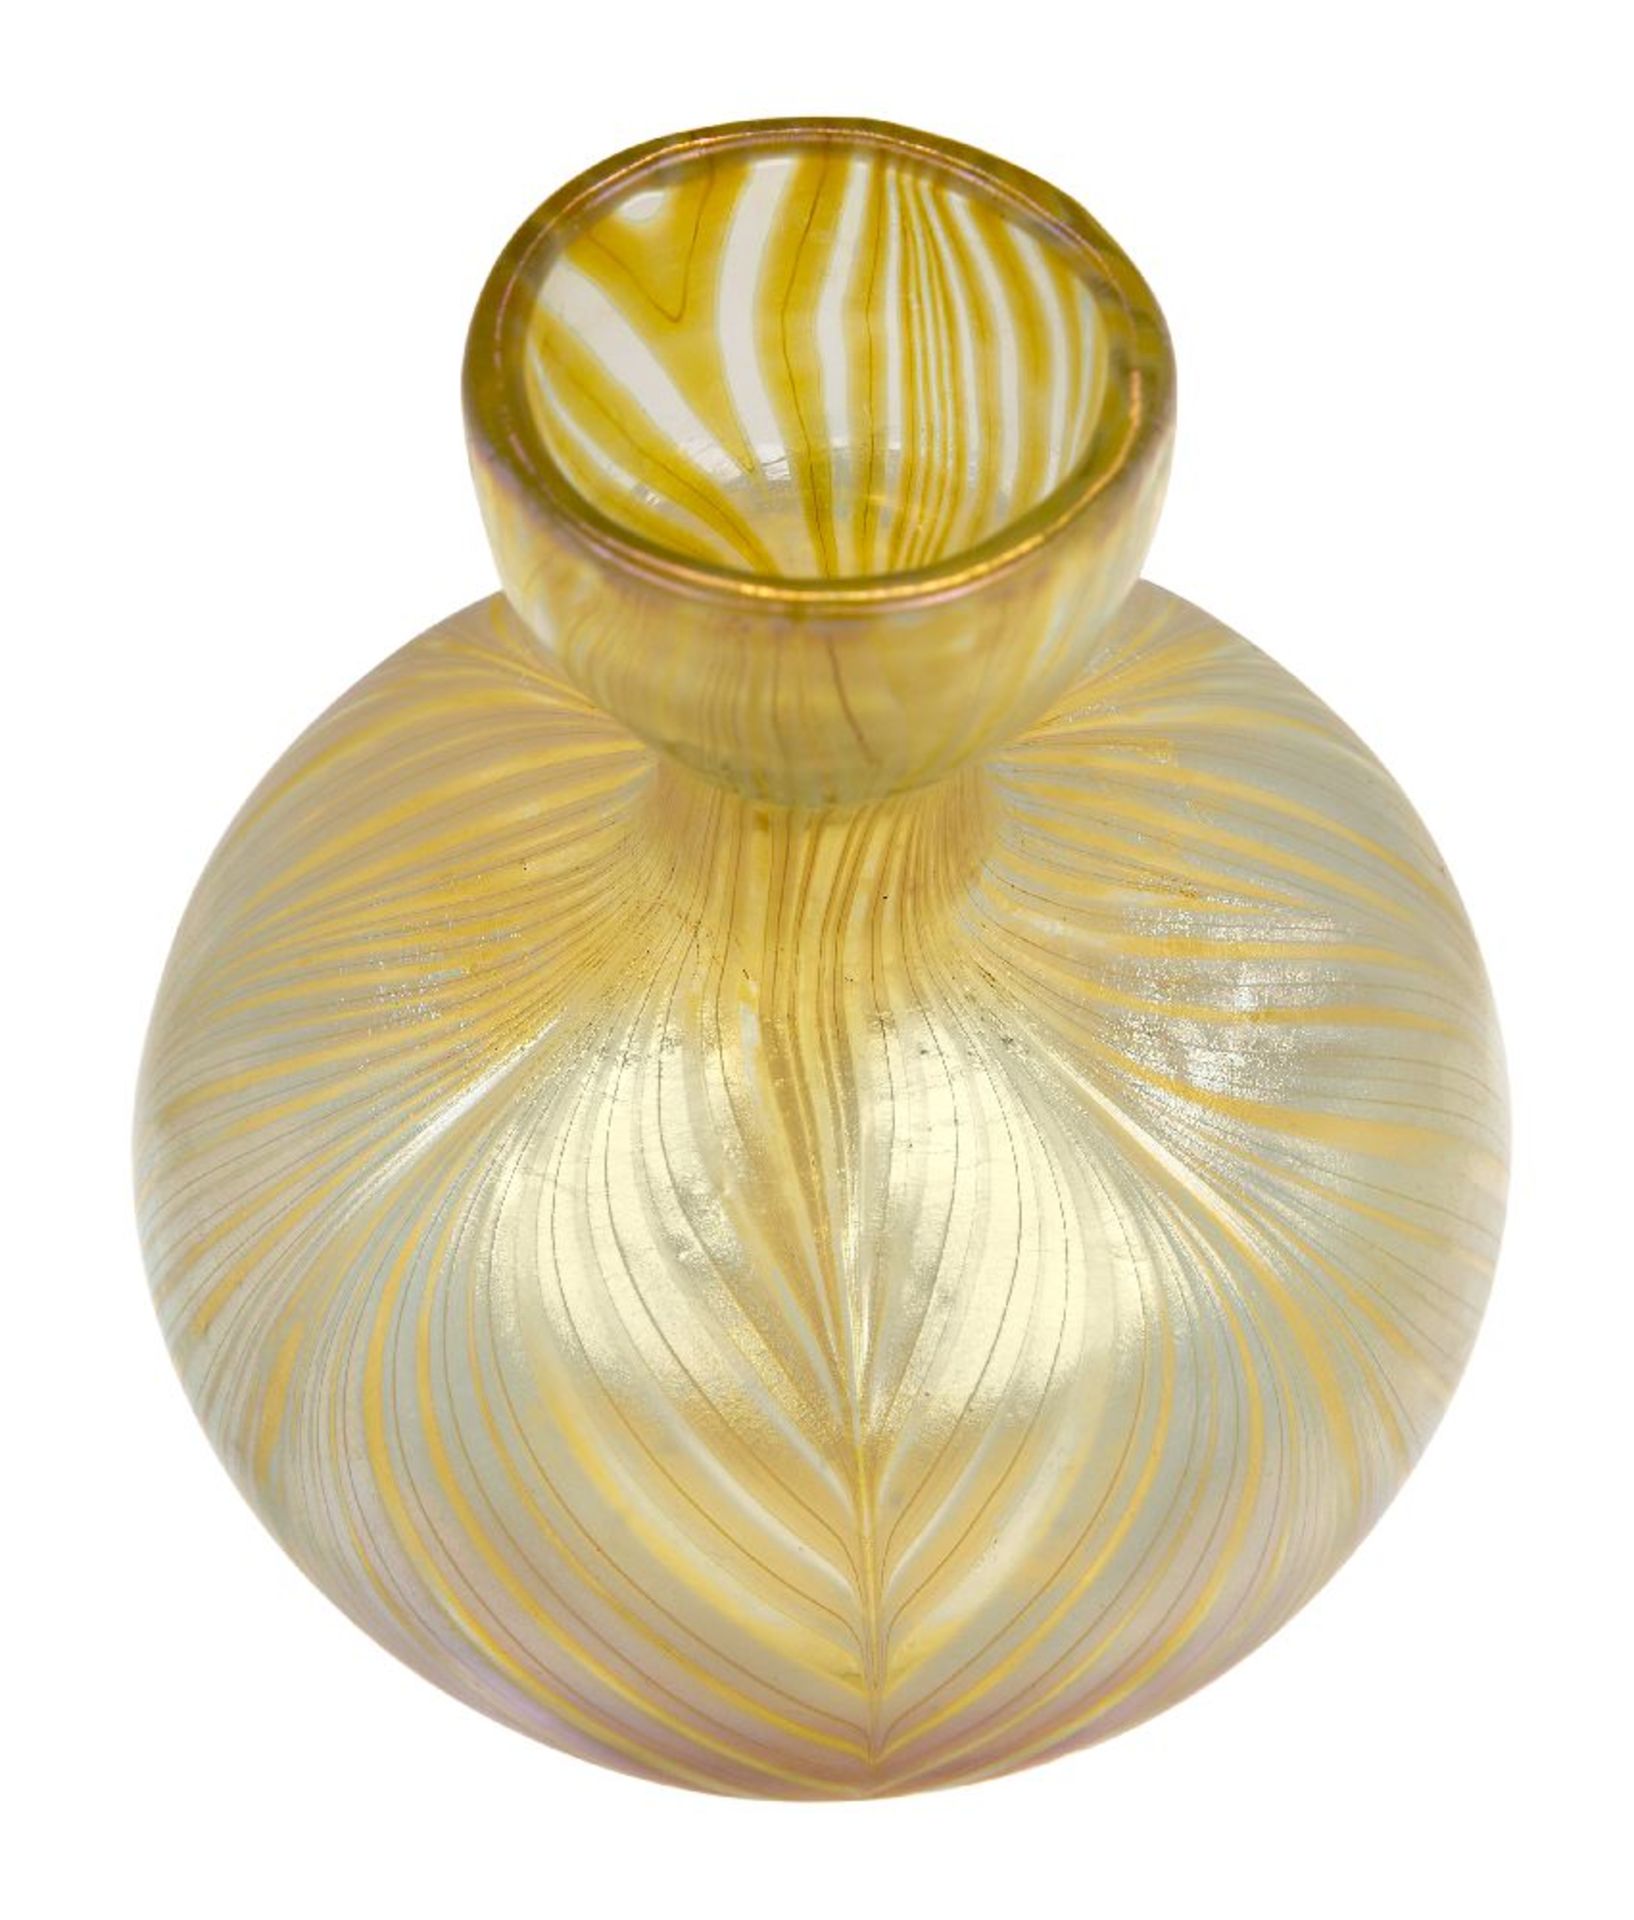 Loetz (Austrian), an iridescent Phaenomen Candia glass vase, c.1900, PG 7501, ground out pontil - Image 2 of 3